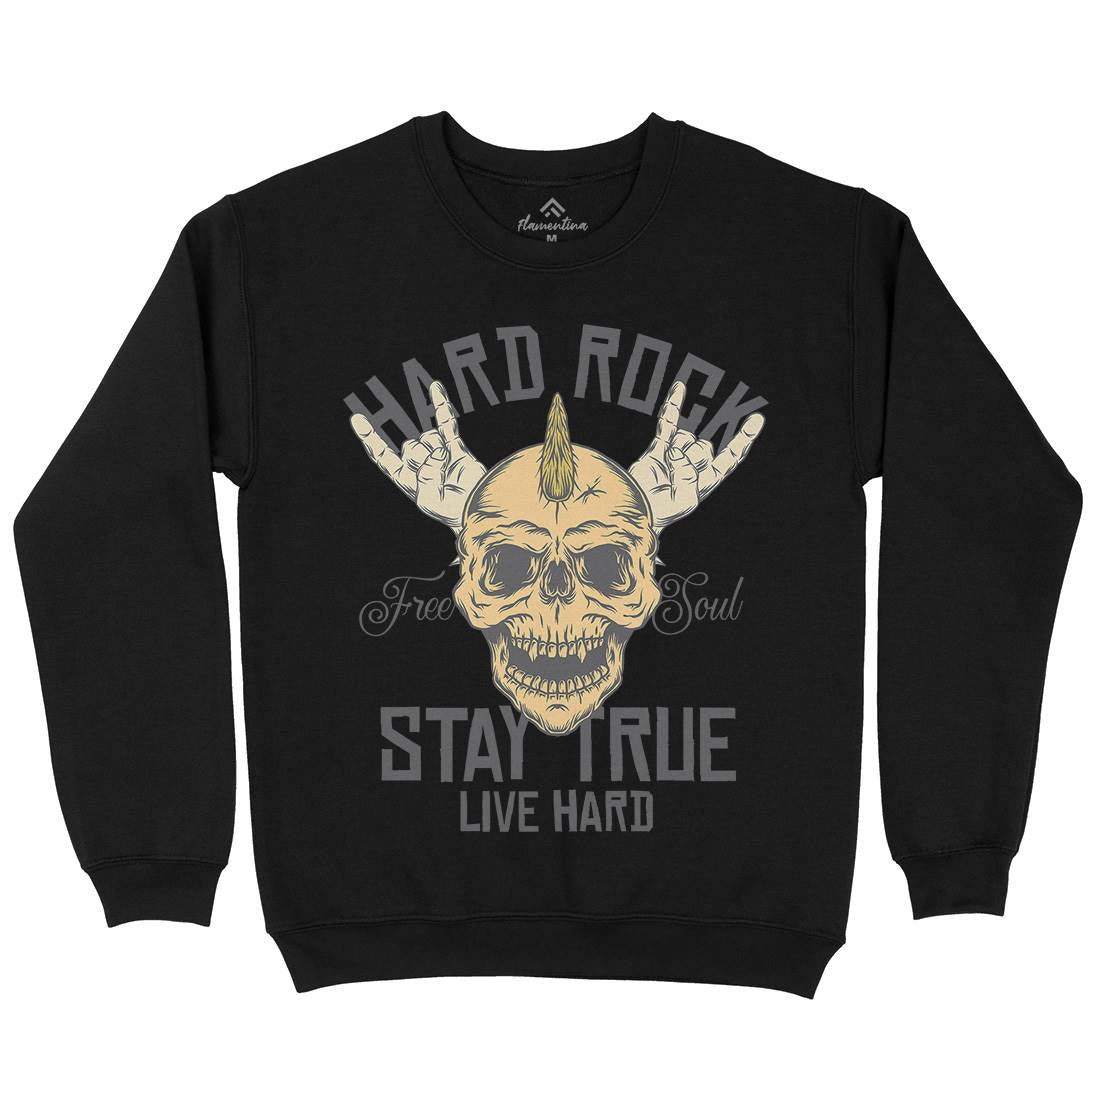 Hard Rock Stay True Kids Crew Neck Sweatshirt Music D943